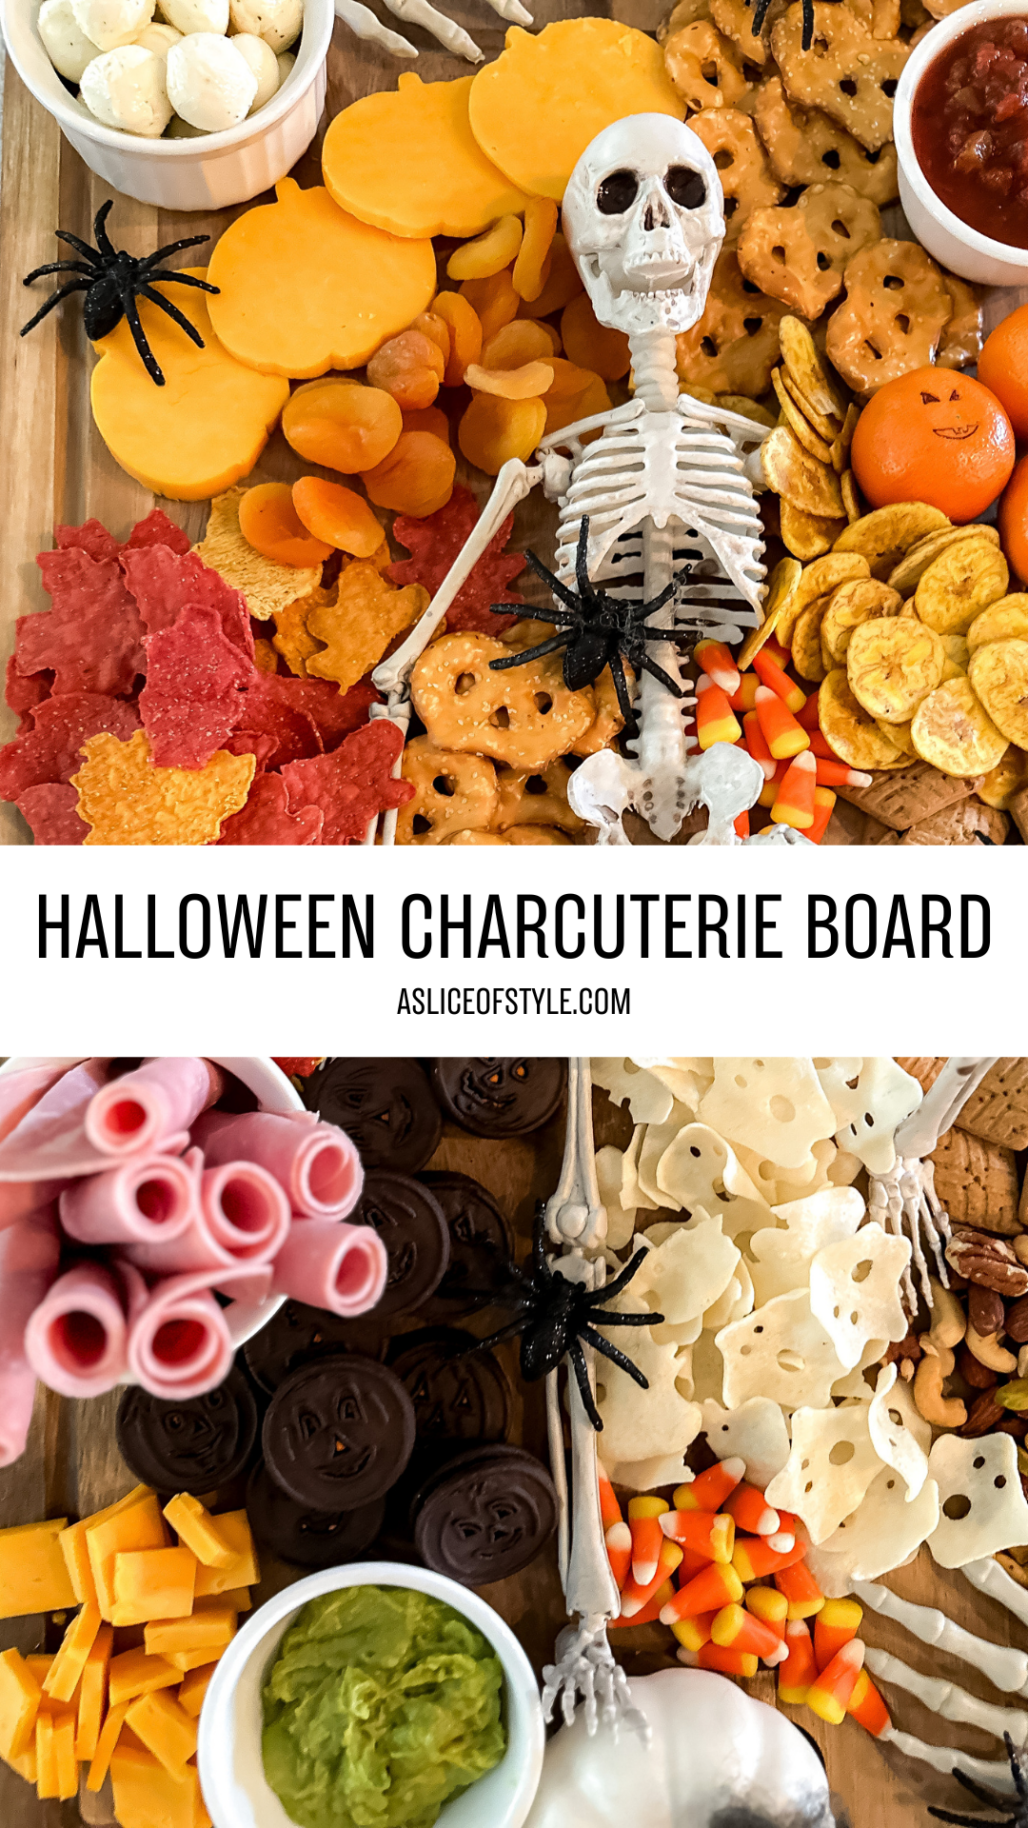 Halloween charcuterie board